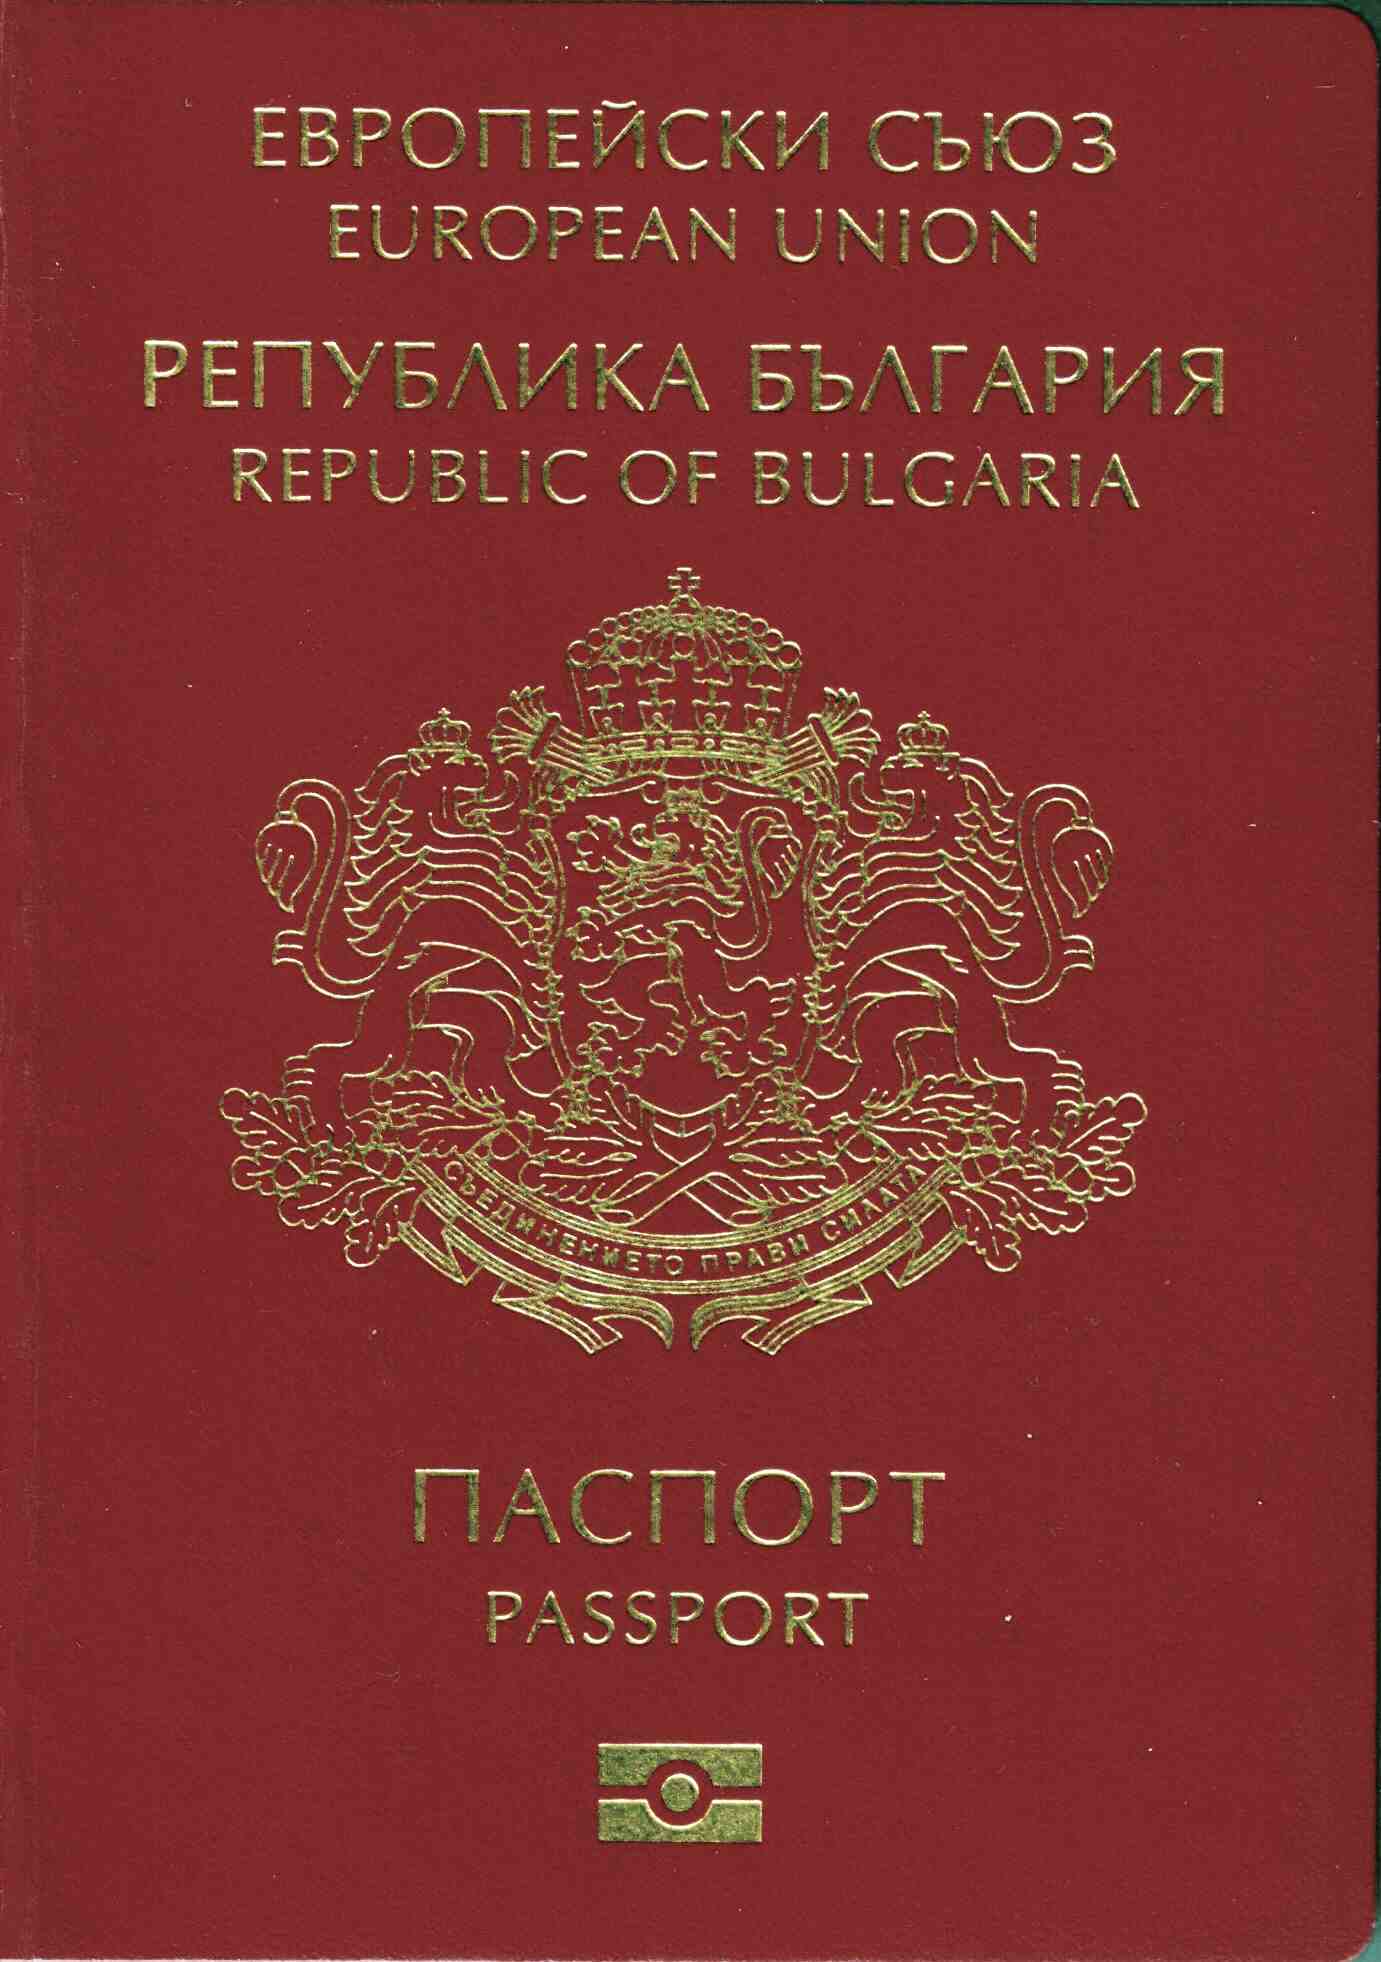 passport rules travelling to bulgaria